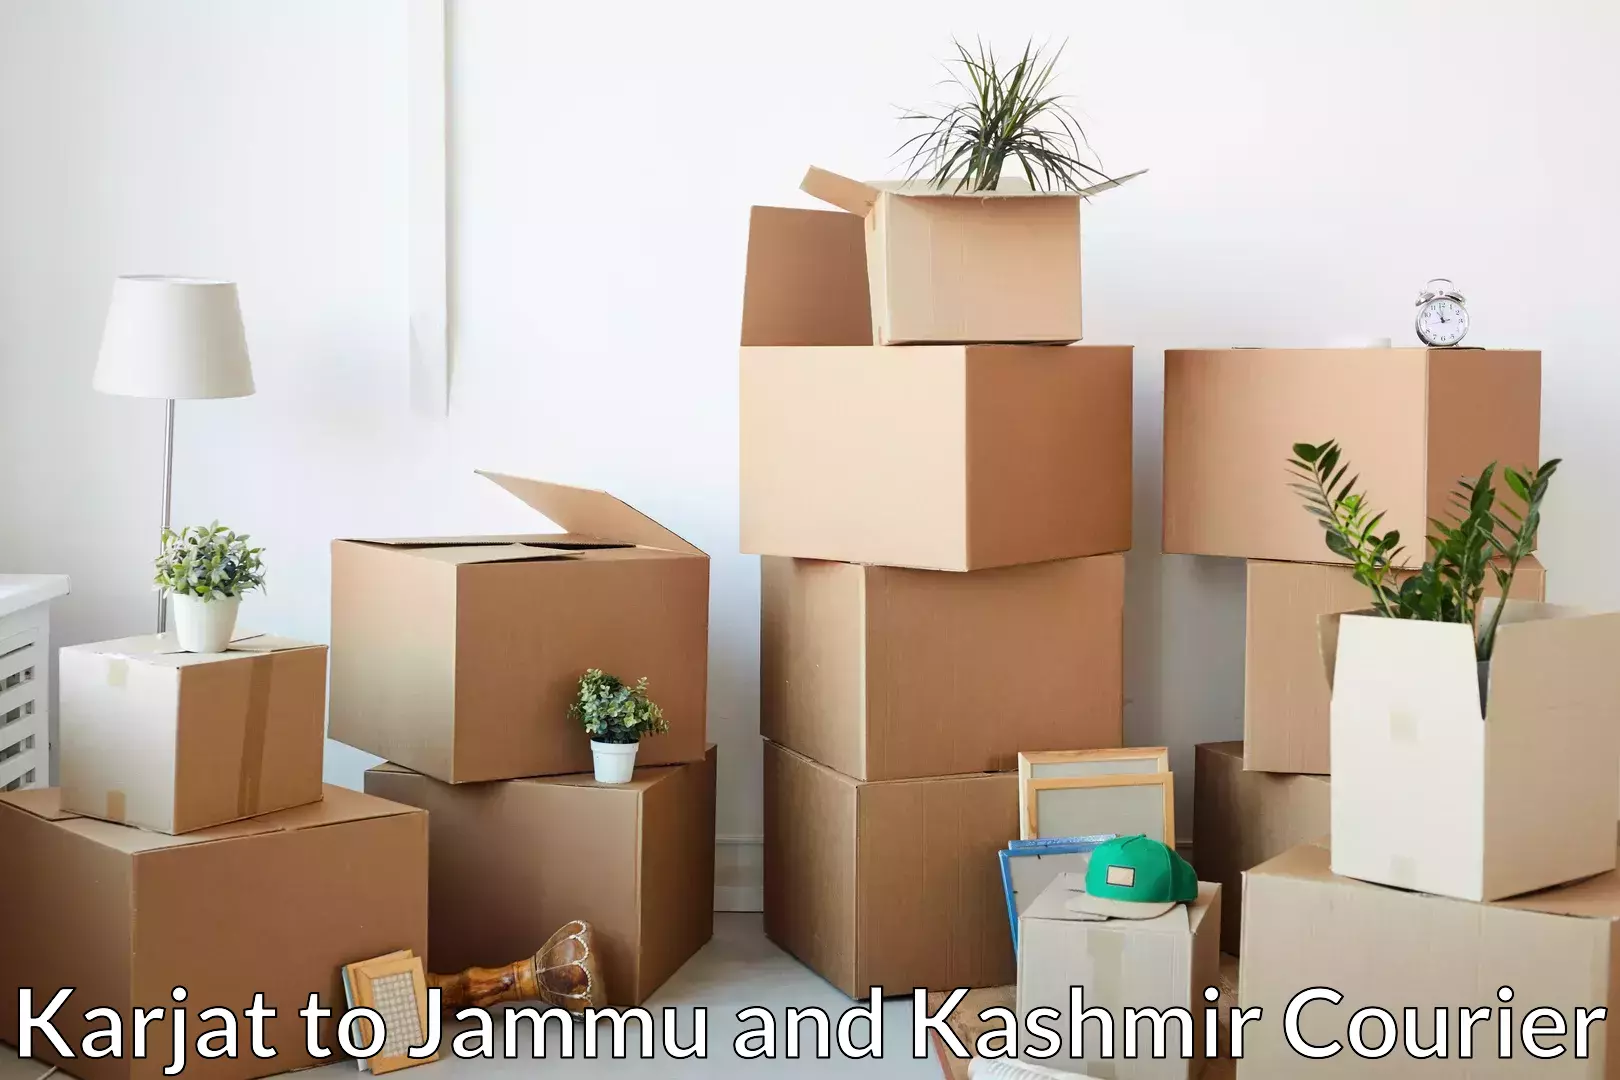 Household goods transport service Karjat to Pulwama